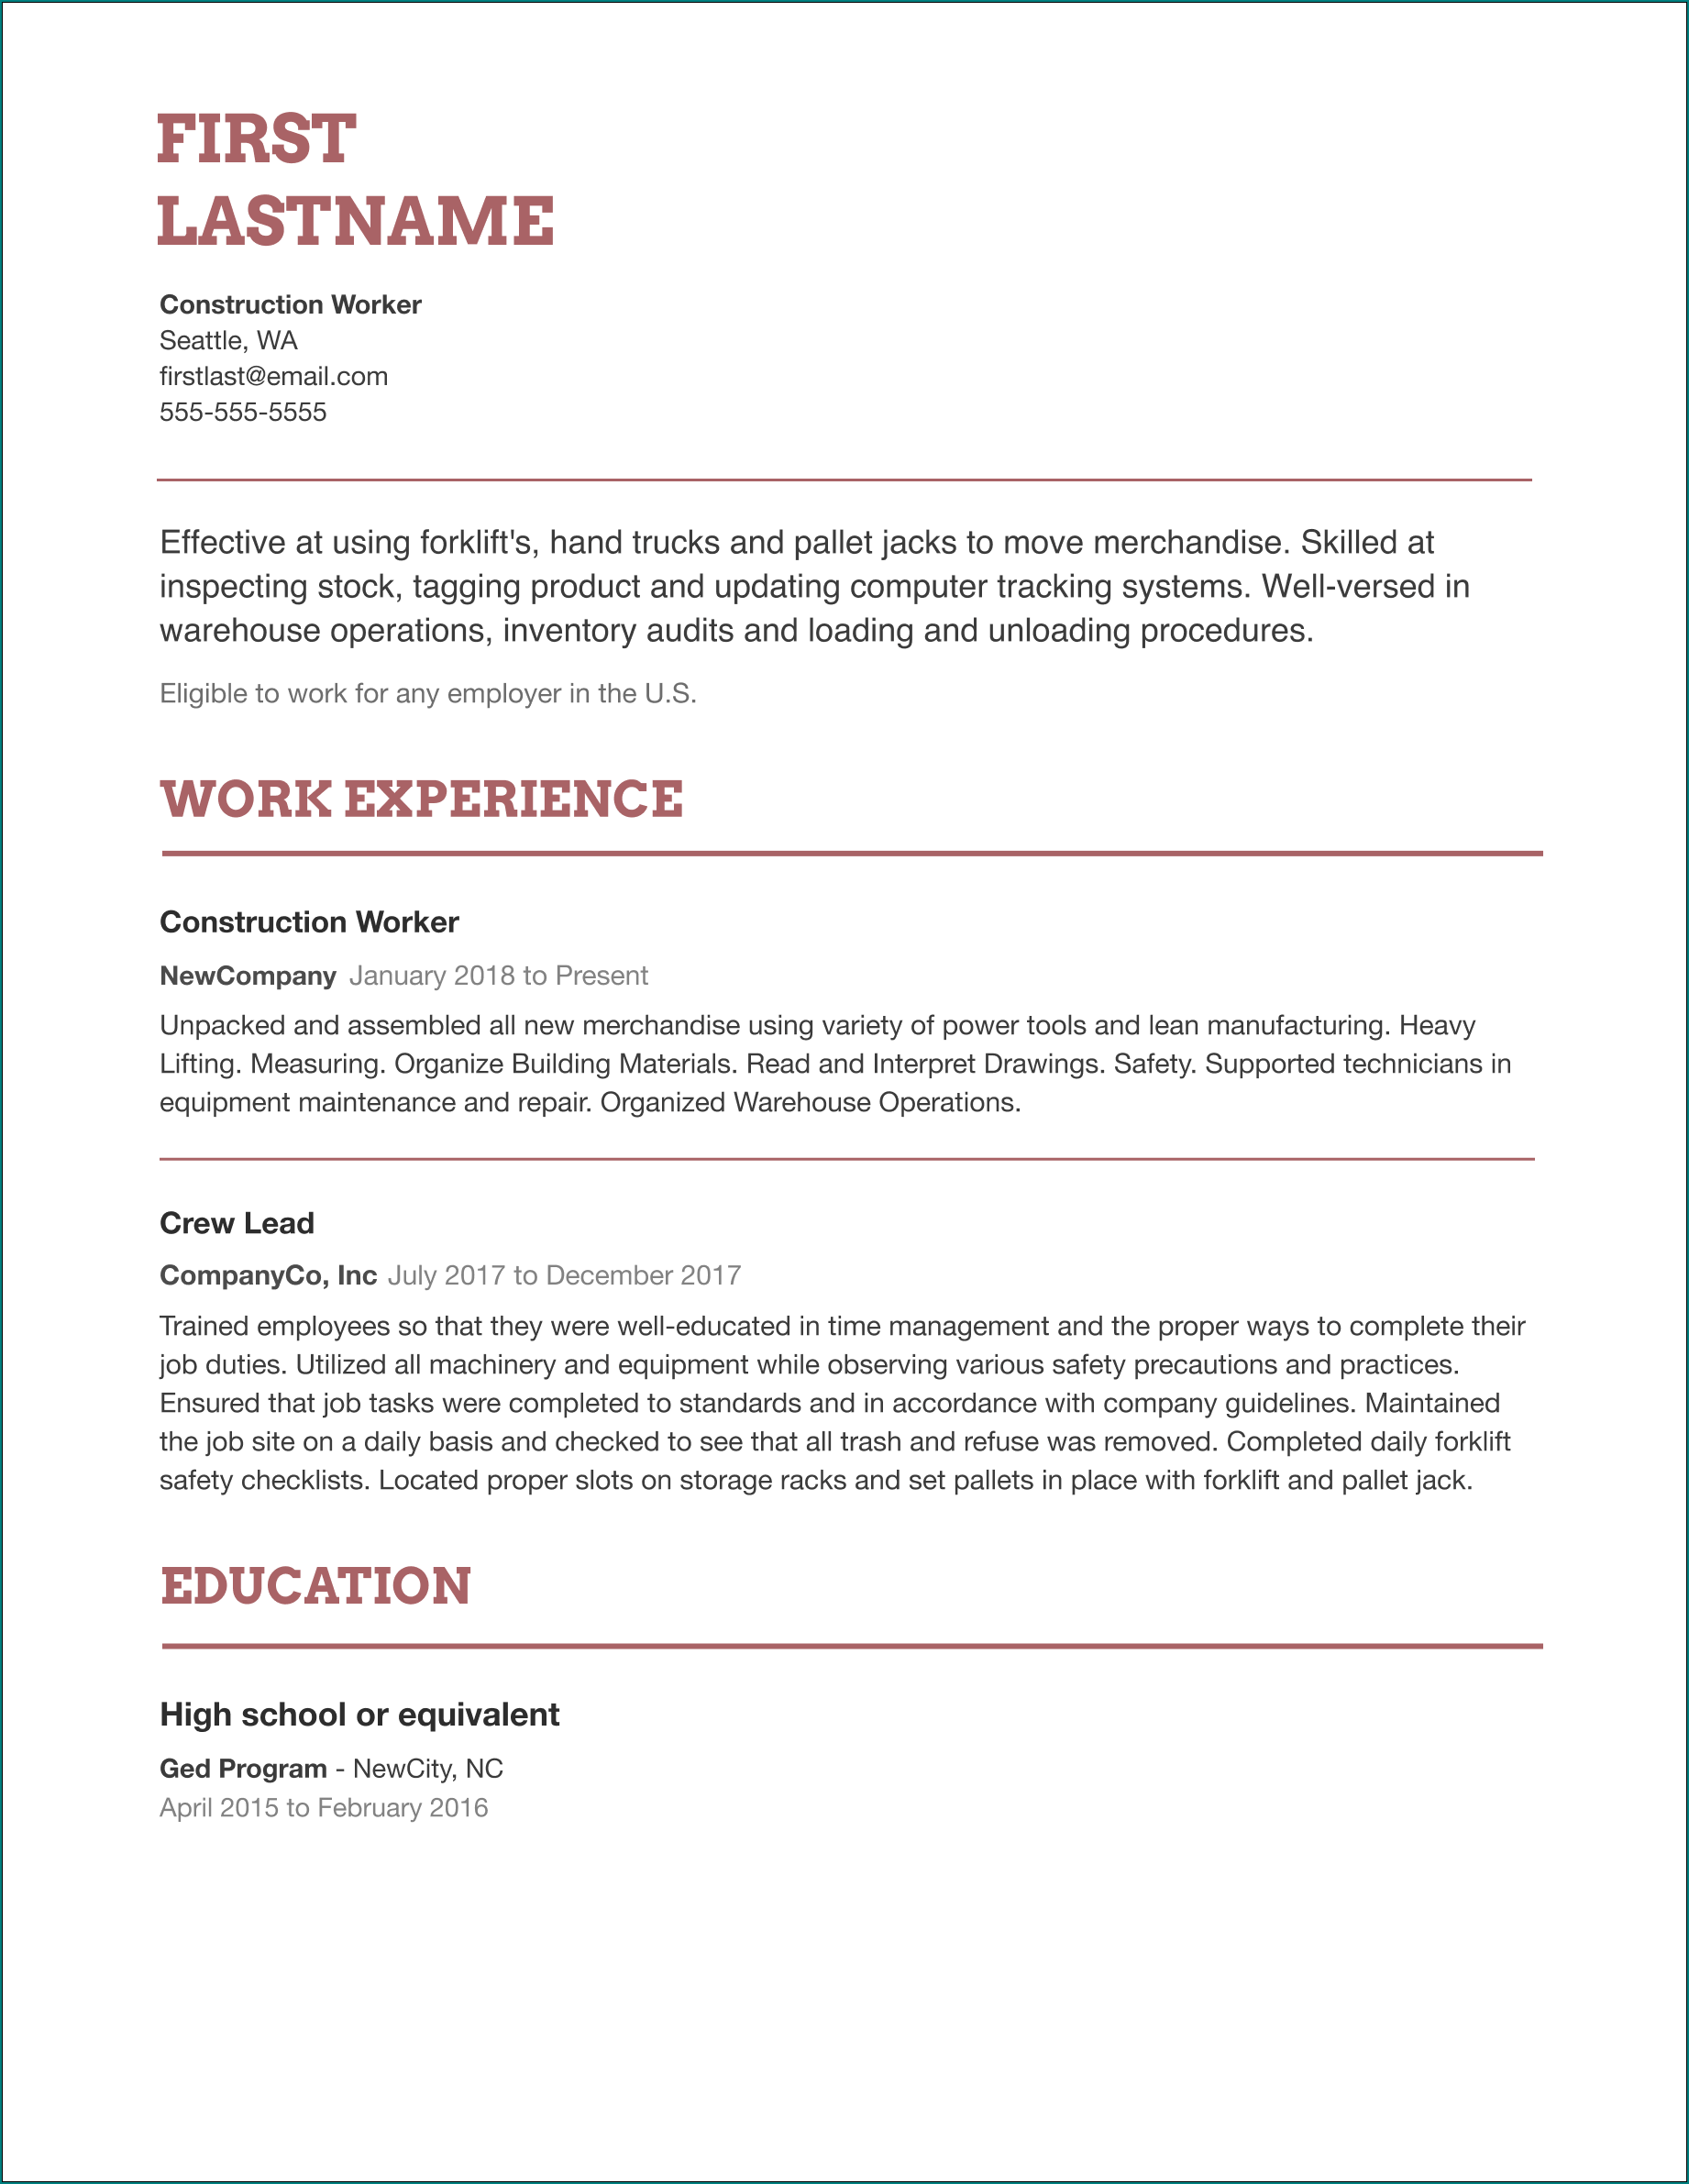 Sample of Basic Resume Template